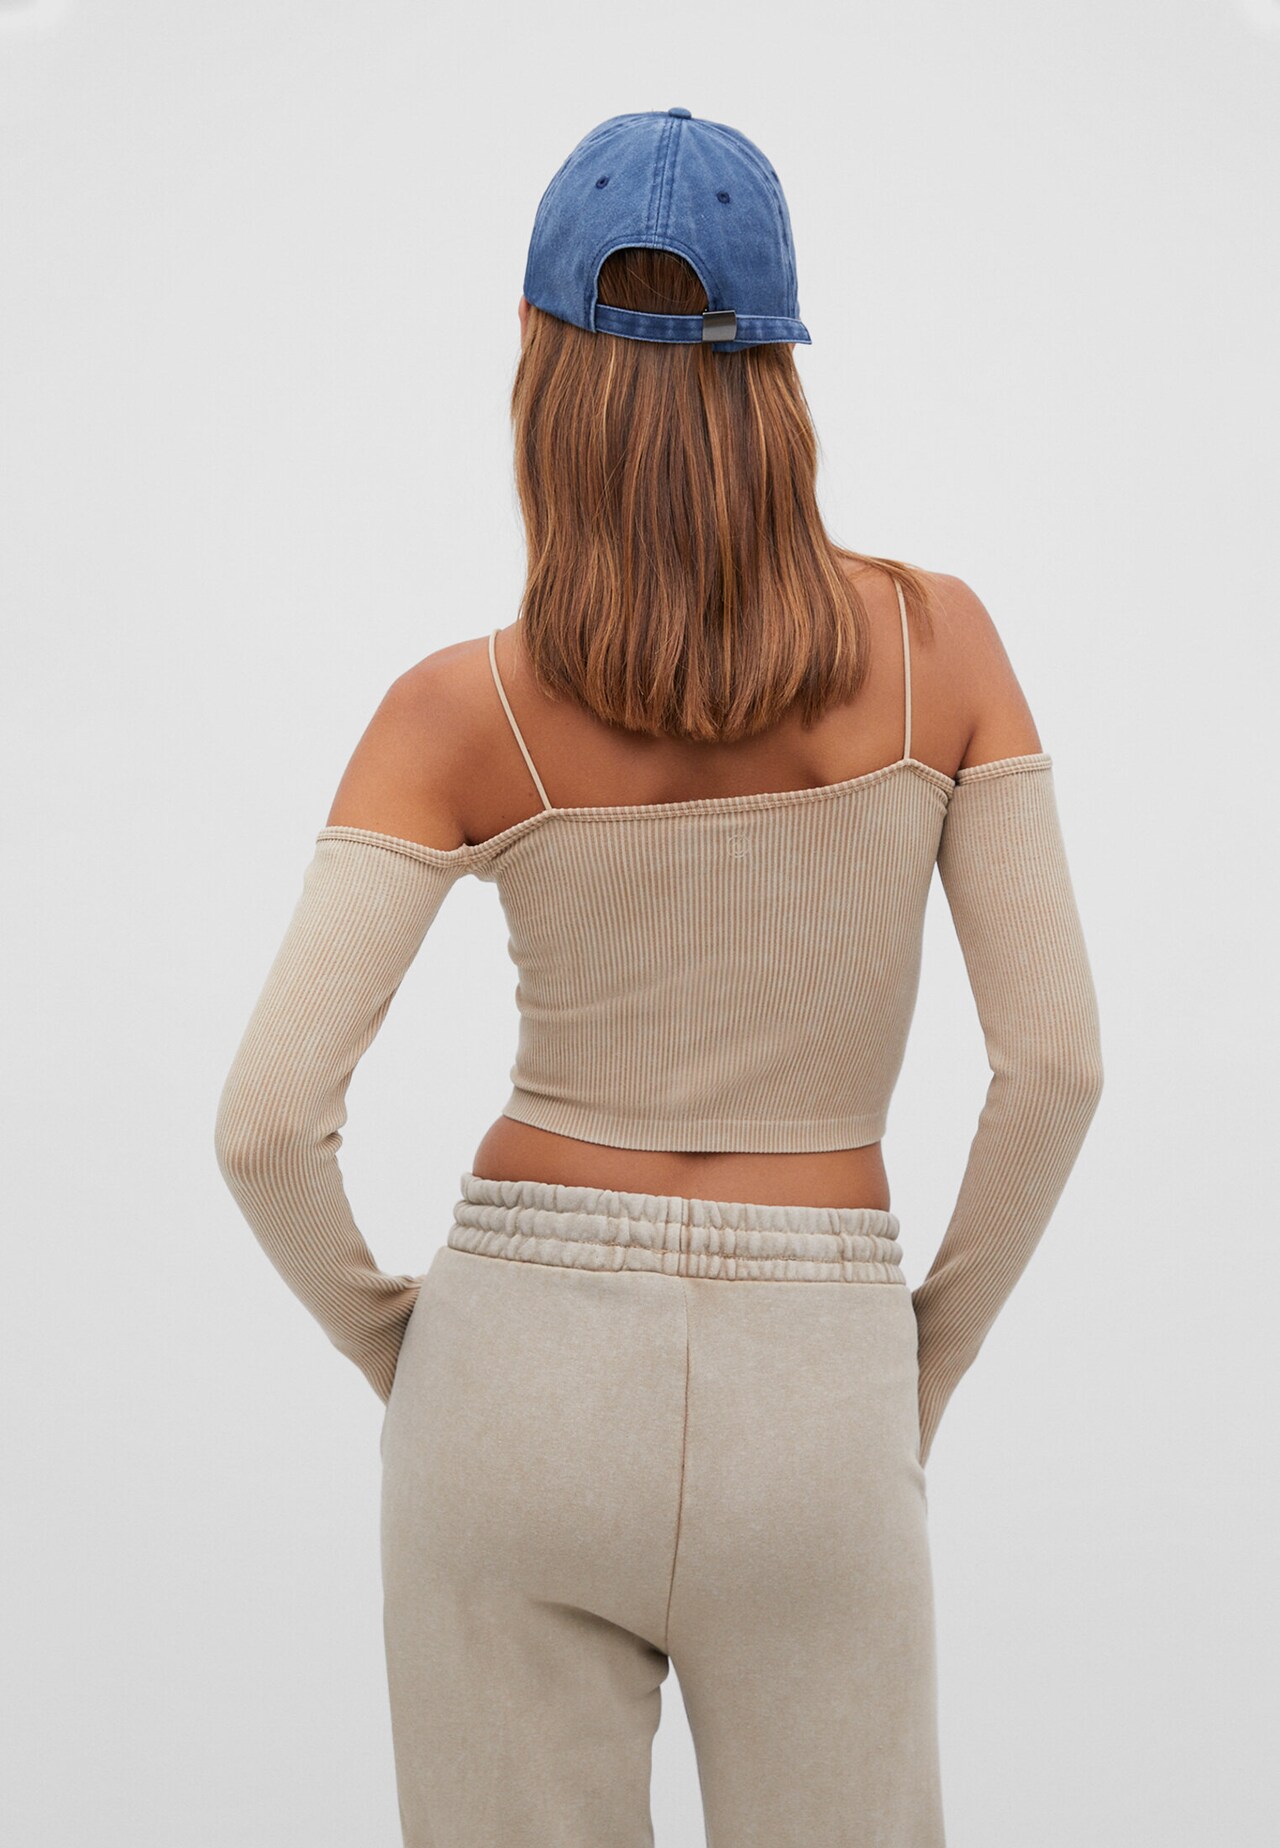 Seamless top with straps - Women's fashion